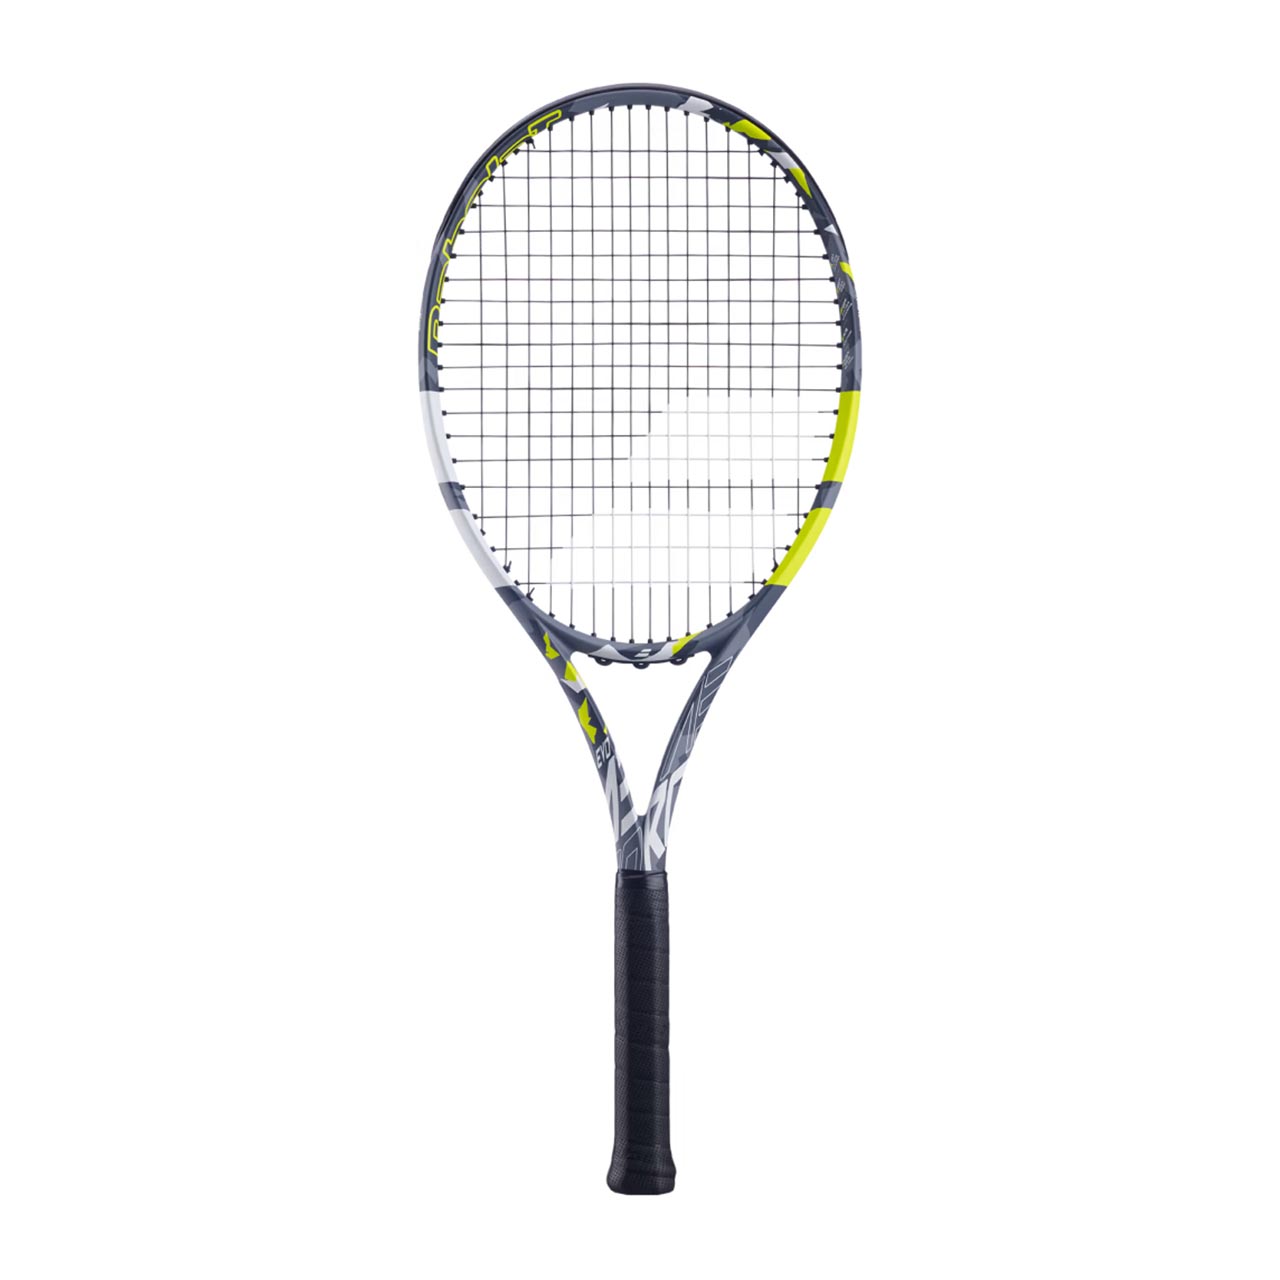 sport service italia tennis racket babolat evo aero 102505 100 - Racchette Tennis - Sport Service Italia